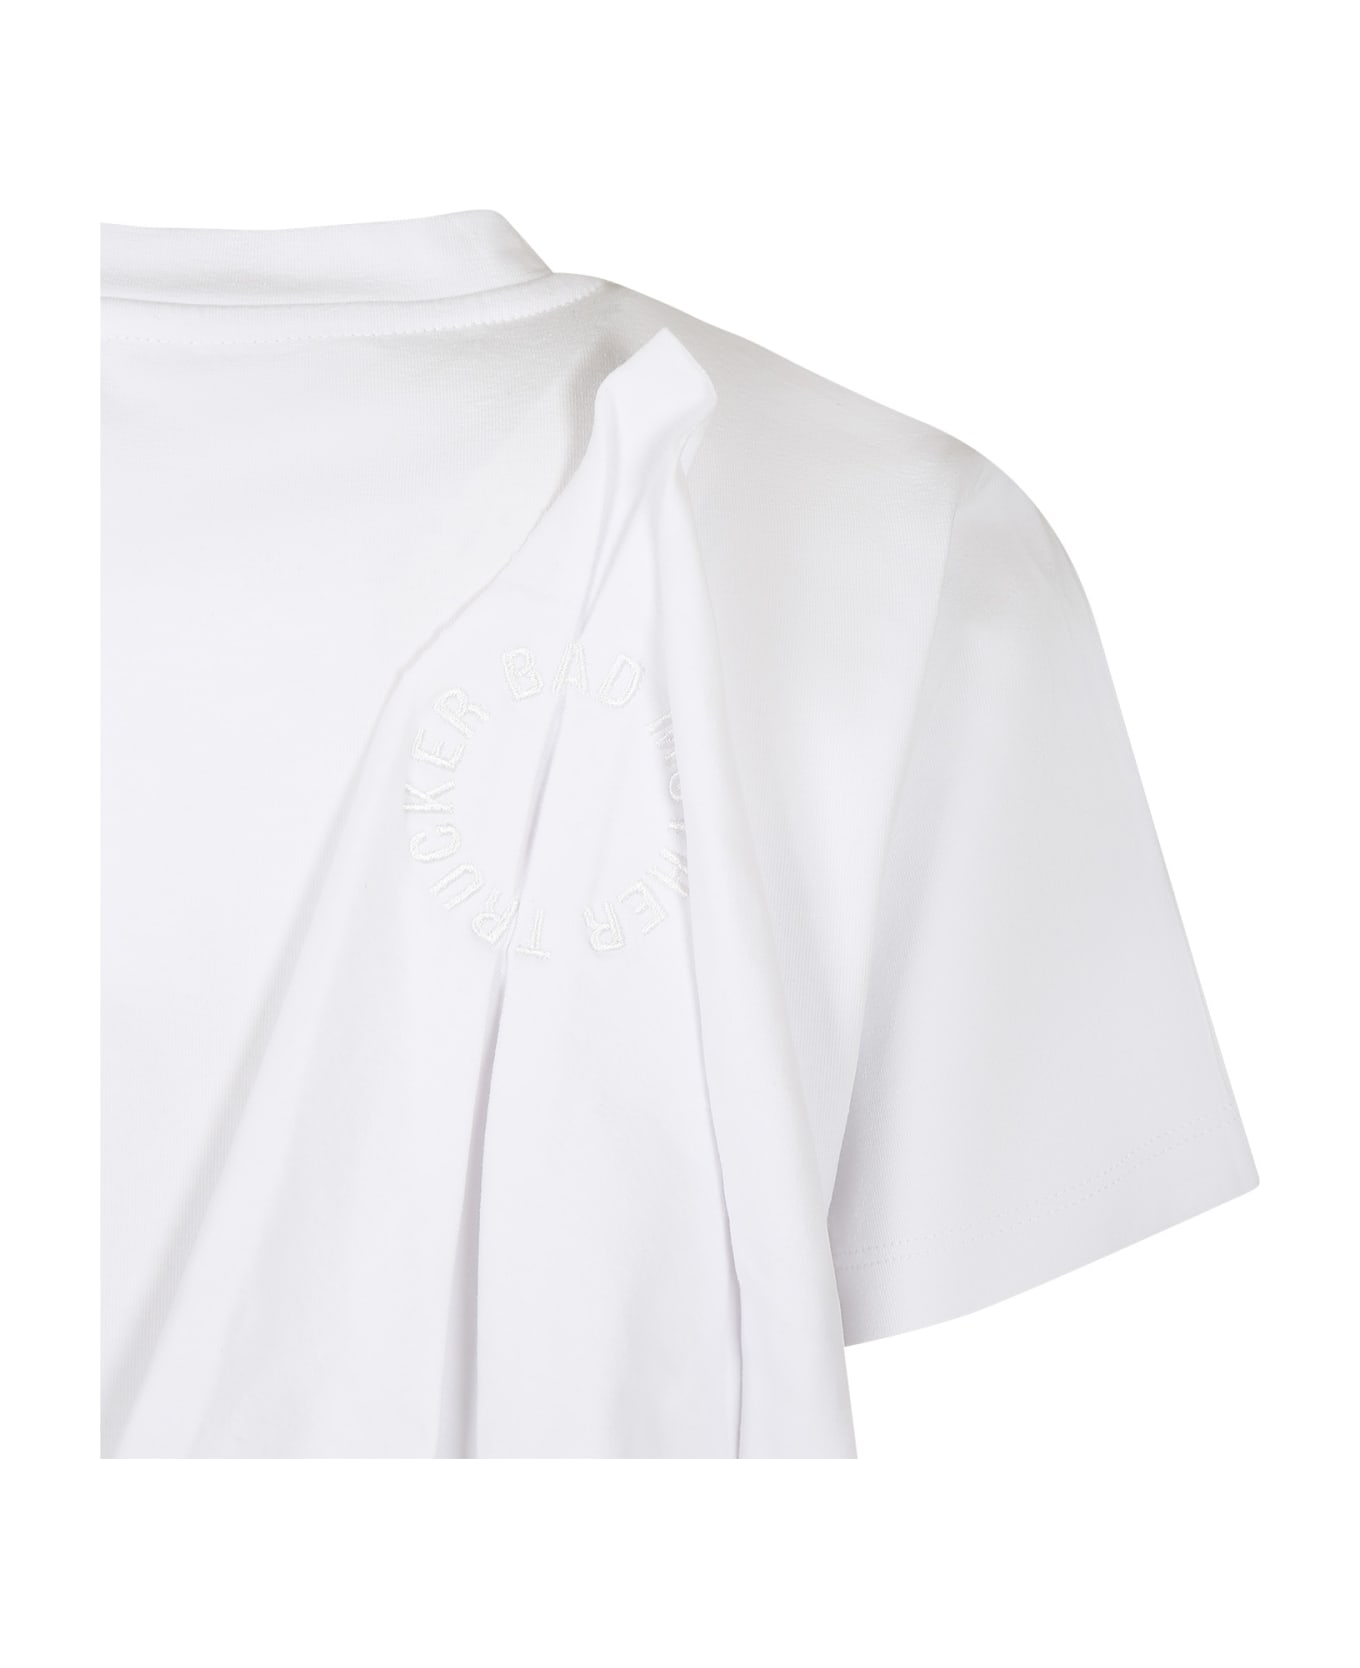 Caroline Bosmans White T-shirt For Girls With Ruffle - White